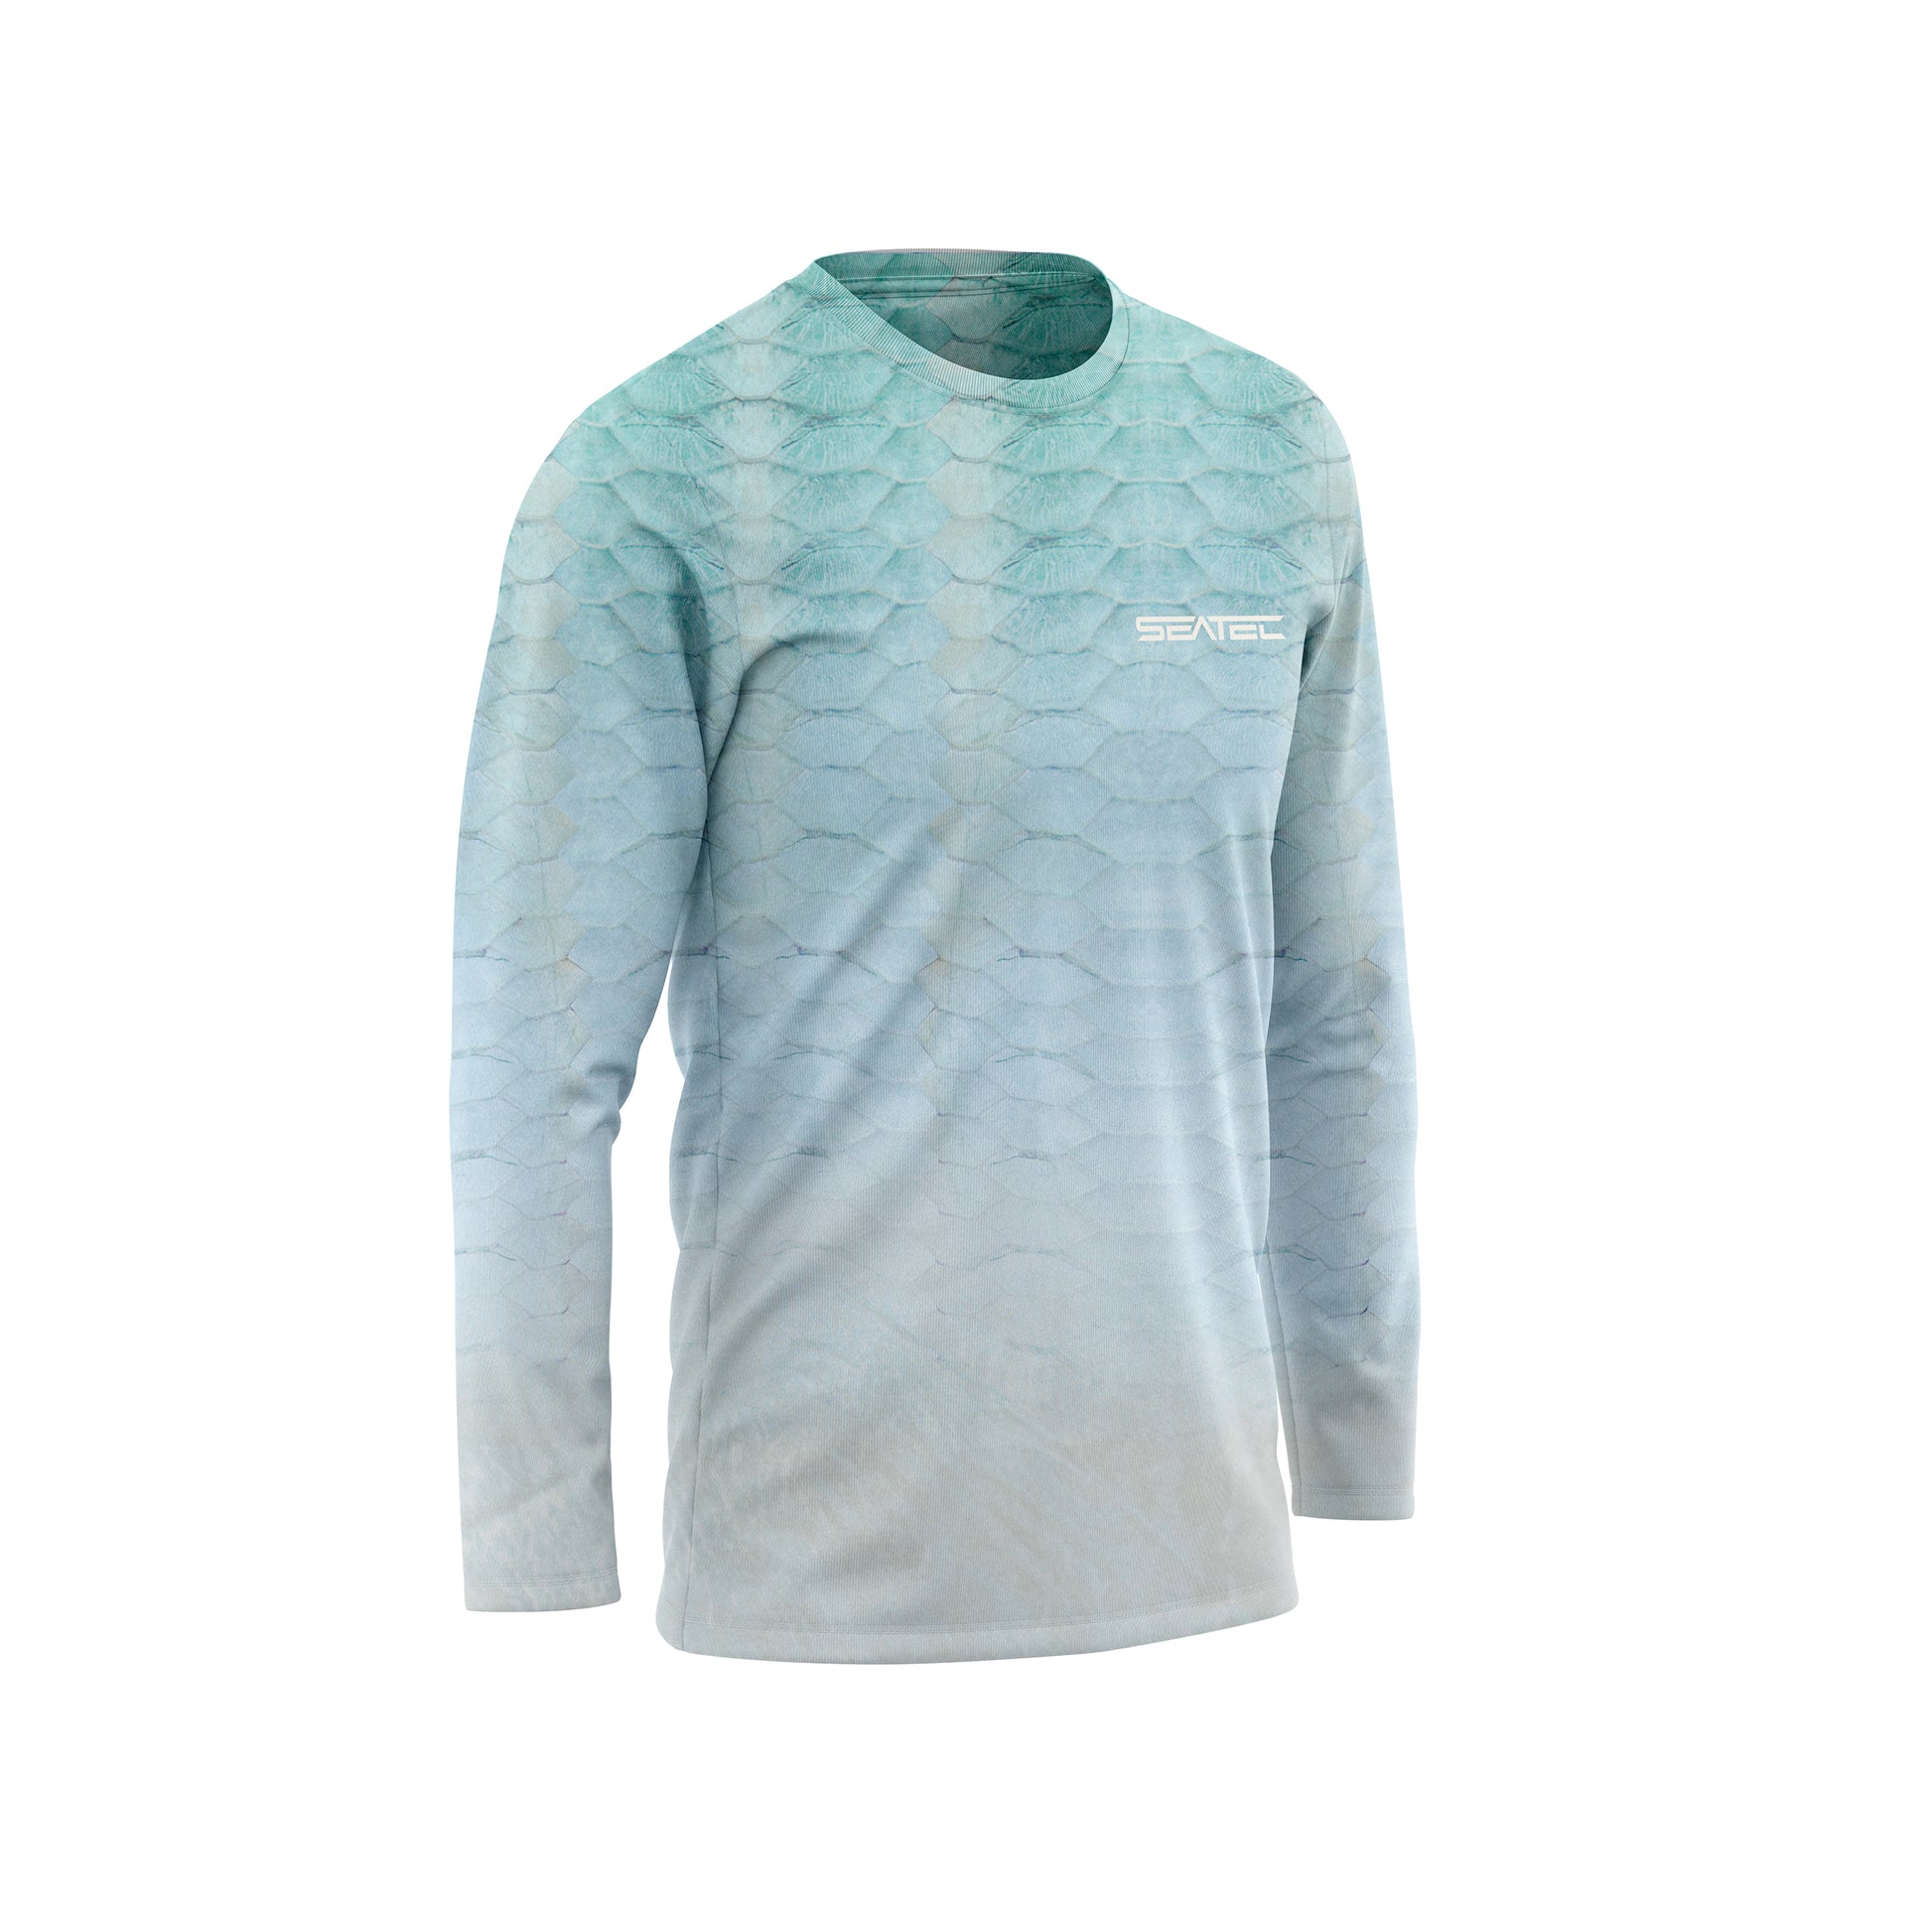 Tarpon Performance Fishing Shirt - Long Sleeve Performance Fishing Shirt - UPF 50+, Snag Resistant, Sun Shirt - Small - Seatec Outfitters